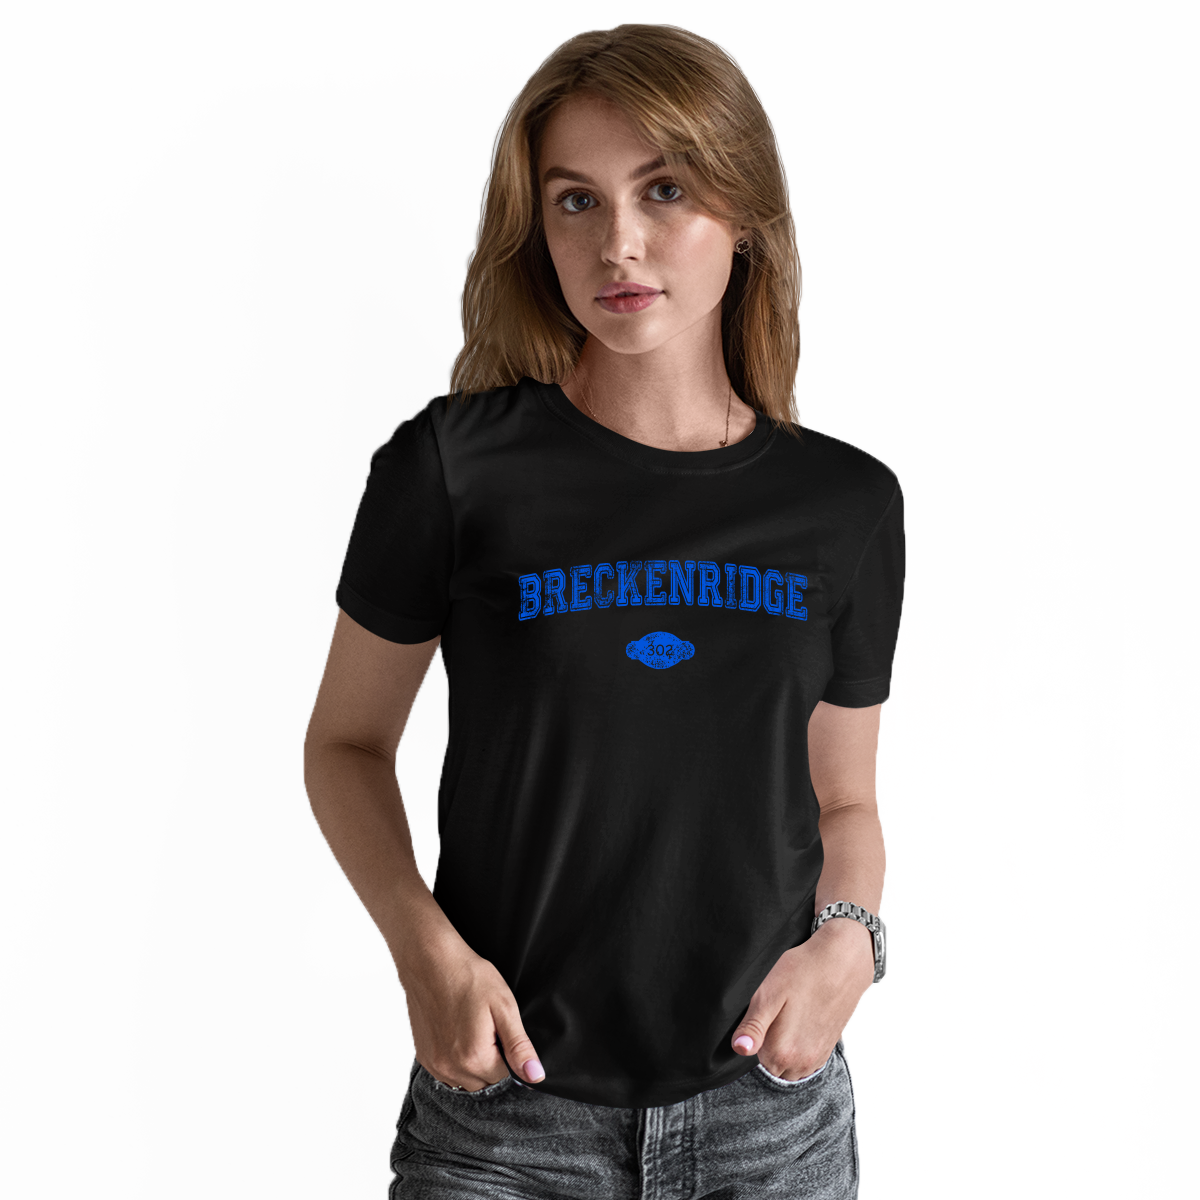 Breckenridge 1880 Represent Women's T-shirt | Black